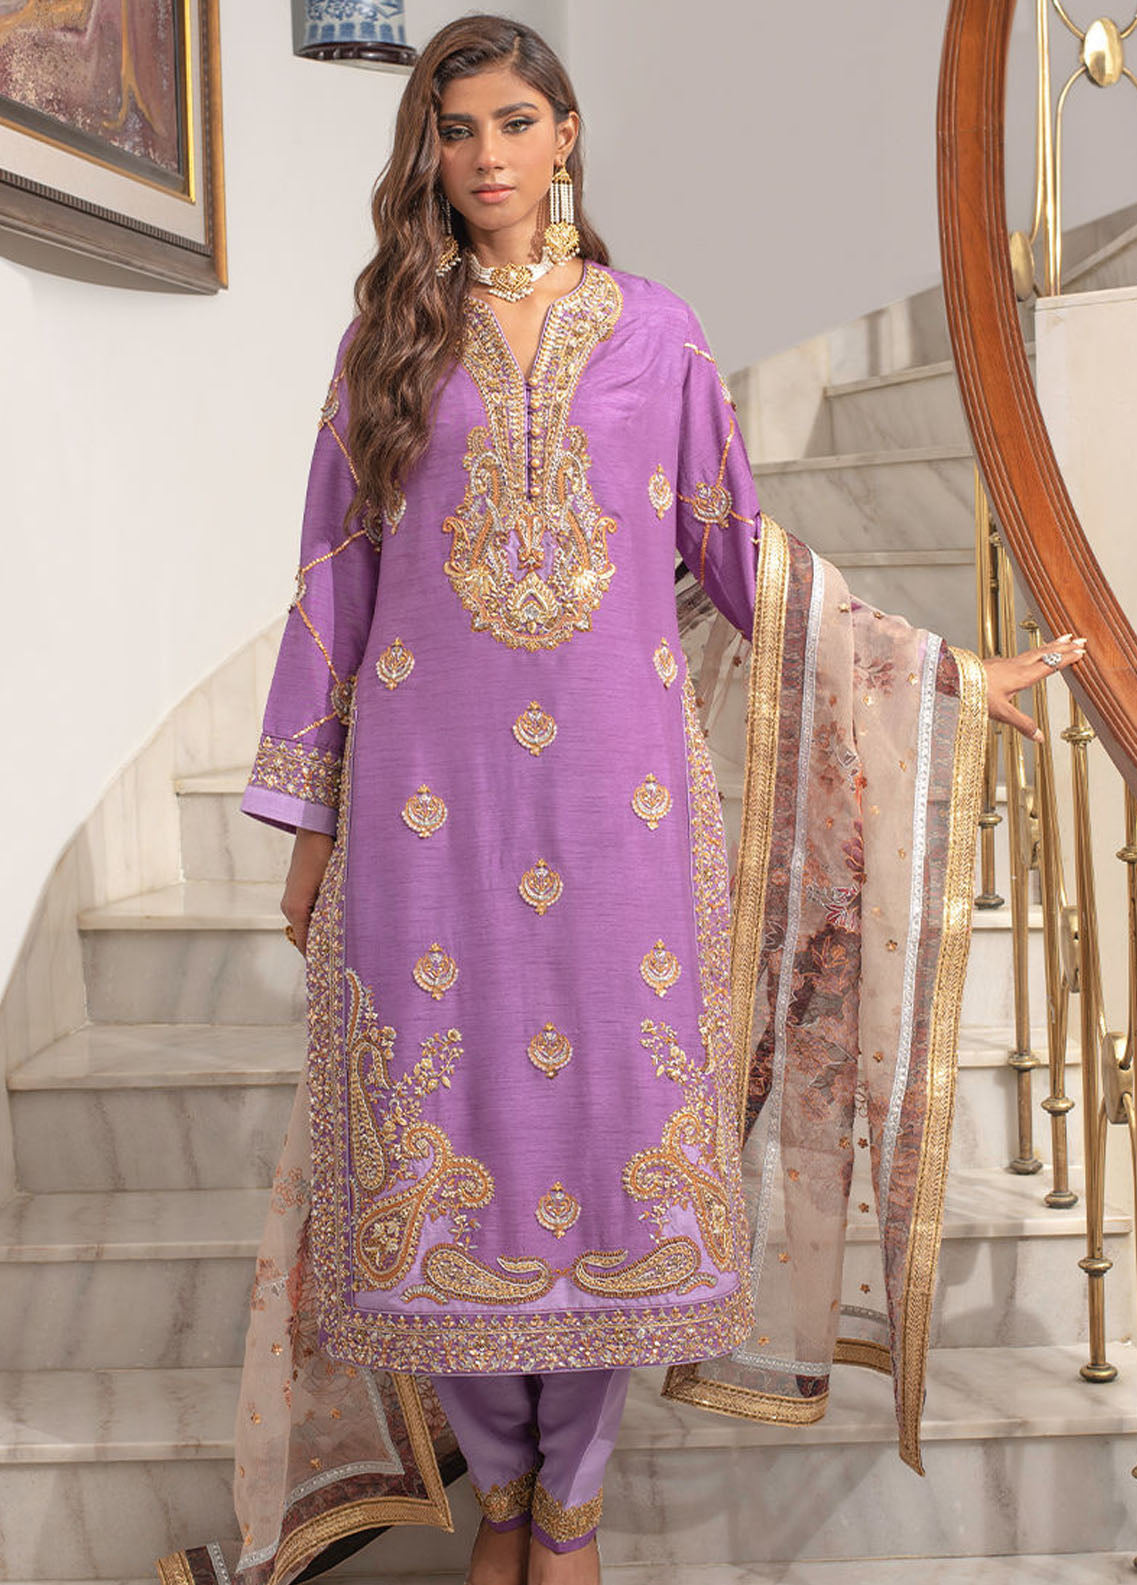 Shamaeel Ansari Pret Formal Silk 3 Piece Suit NUR-02